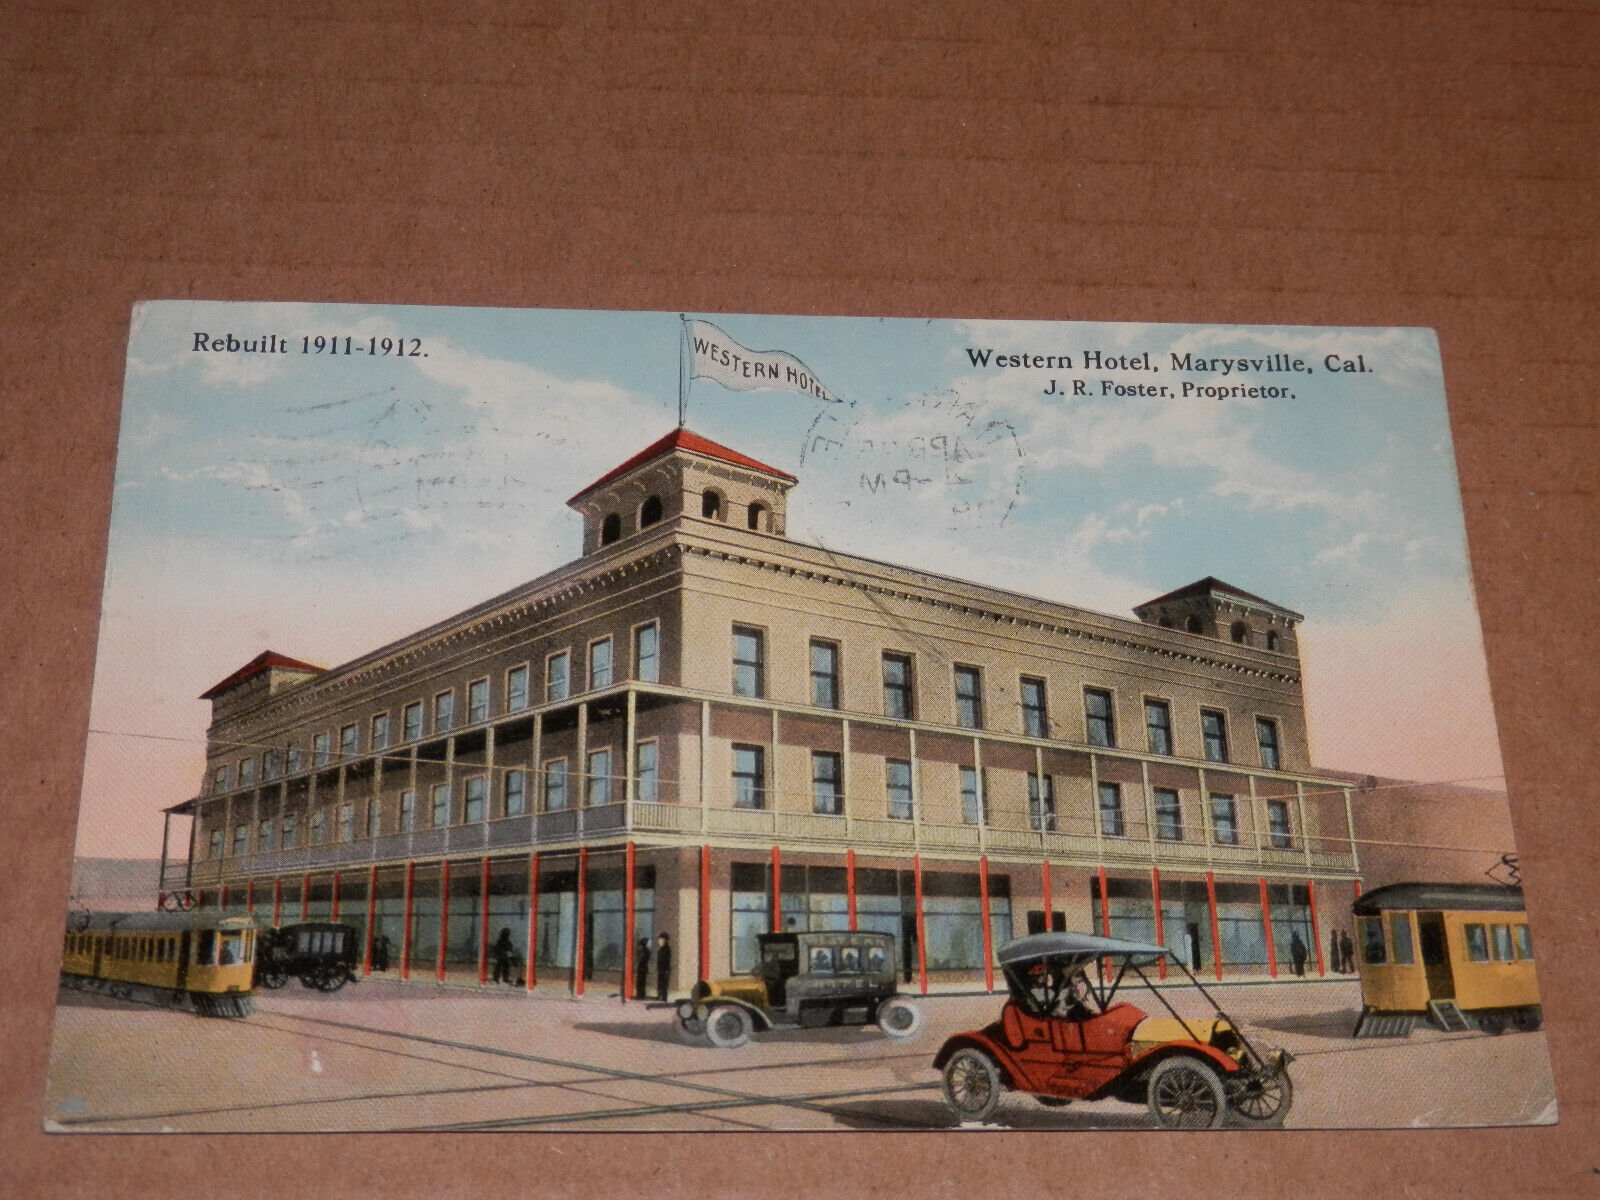 MARYSVILLE CA - USED 1915 POSTCARD - WESTERN HOTEL - REBUILT 1911-1912